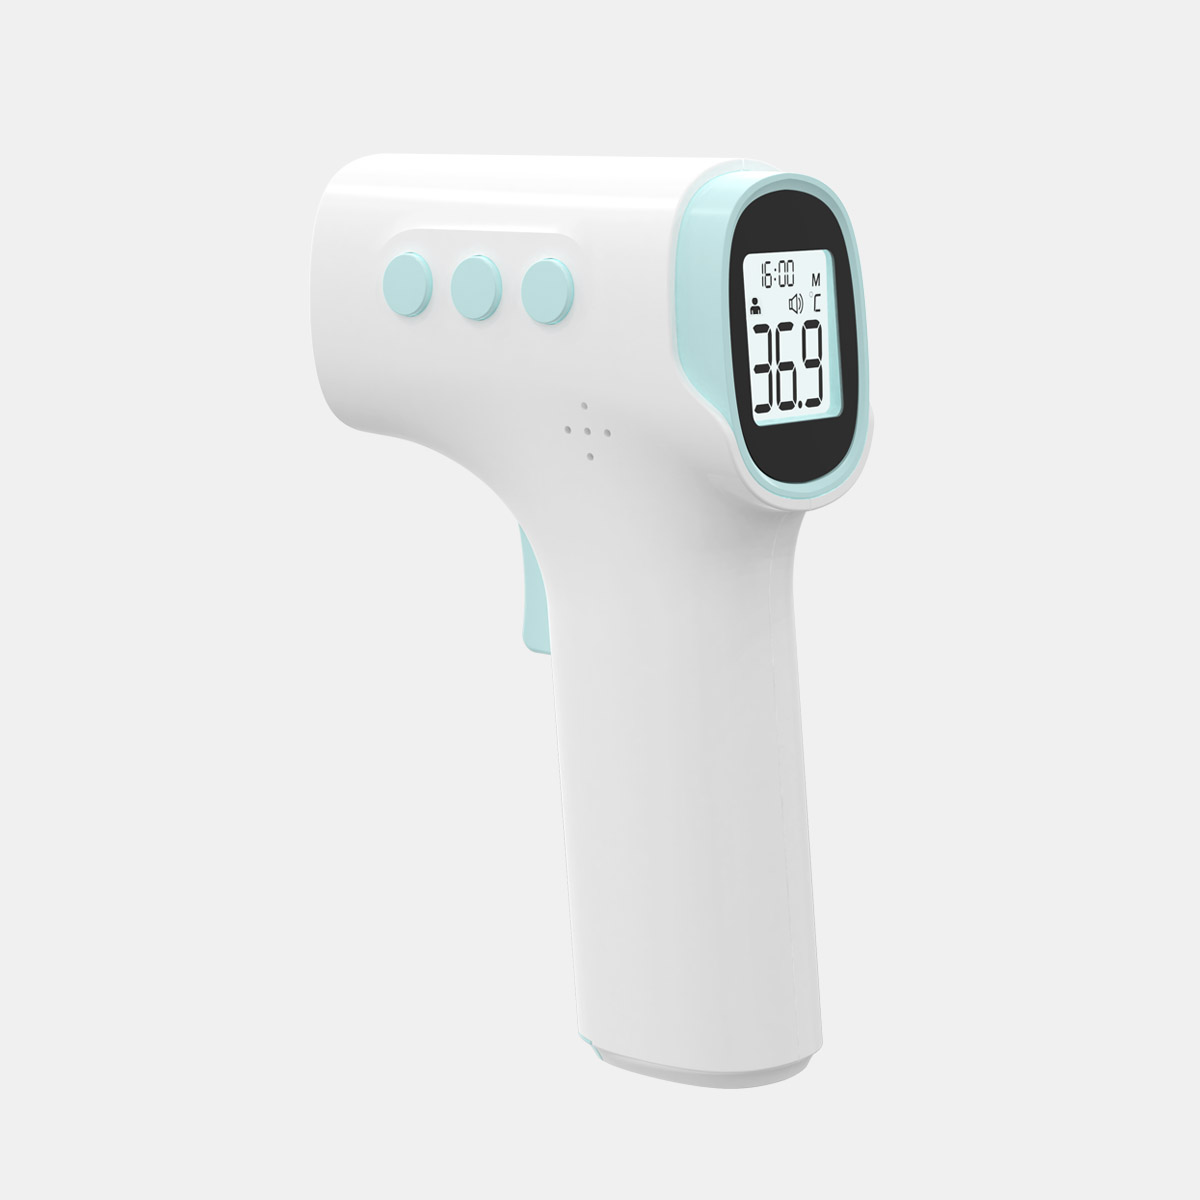 CE MDR Muxaka wa Xibamu lexi nga tihlanganisiki xa Infrared Baby Electronic Thermometer ya le mahlweni